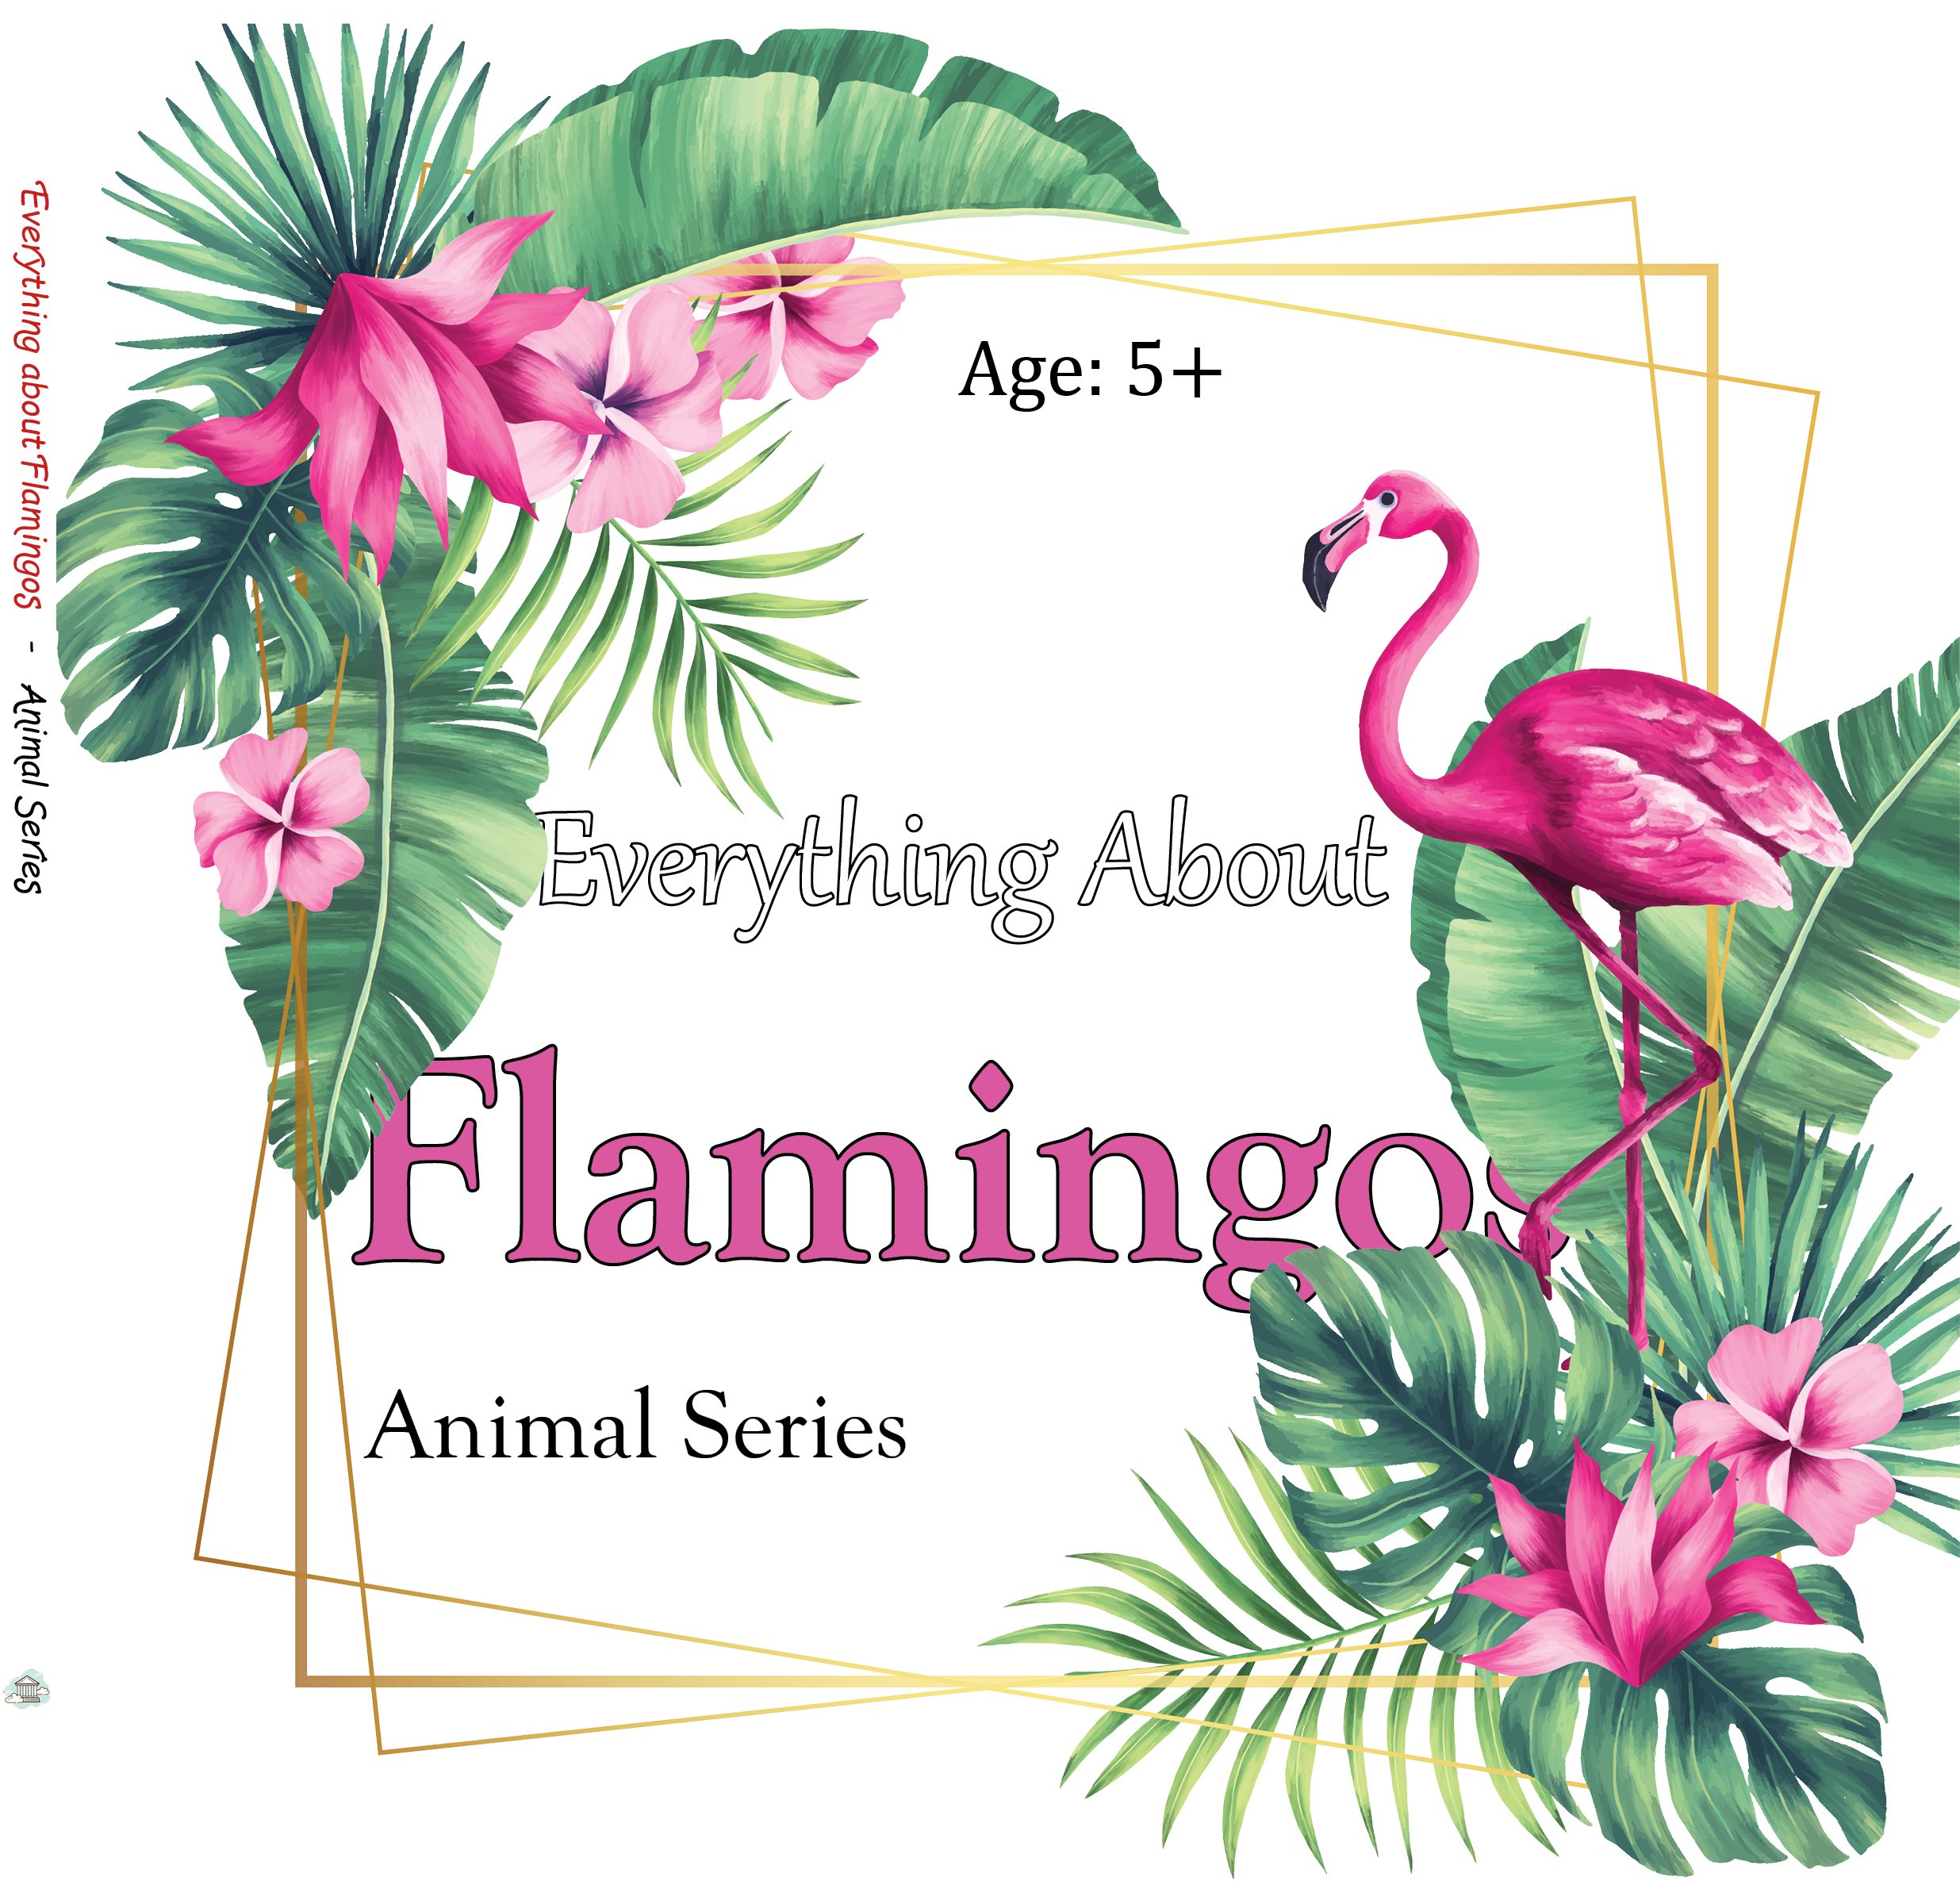 Everything about Flamingos - Animal Series.jpg